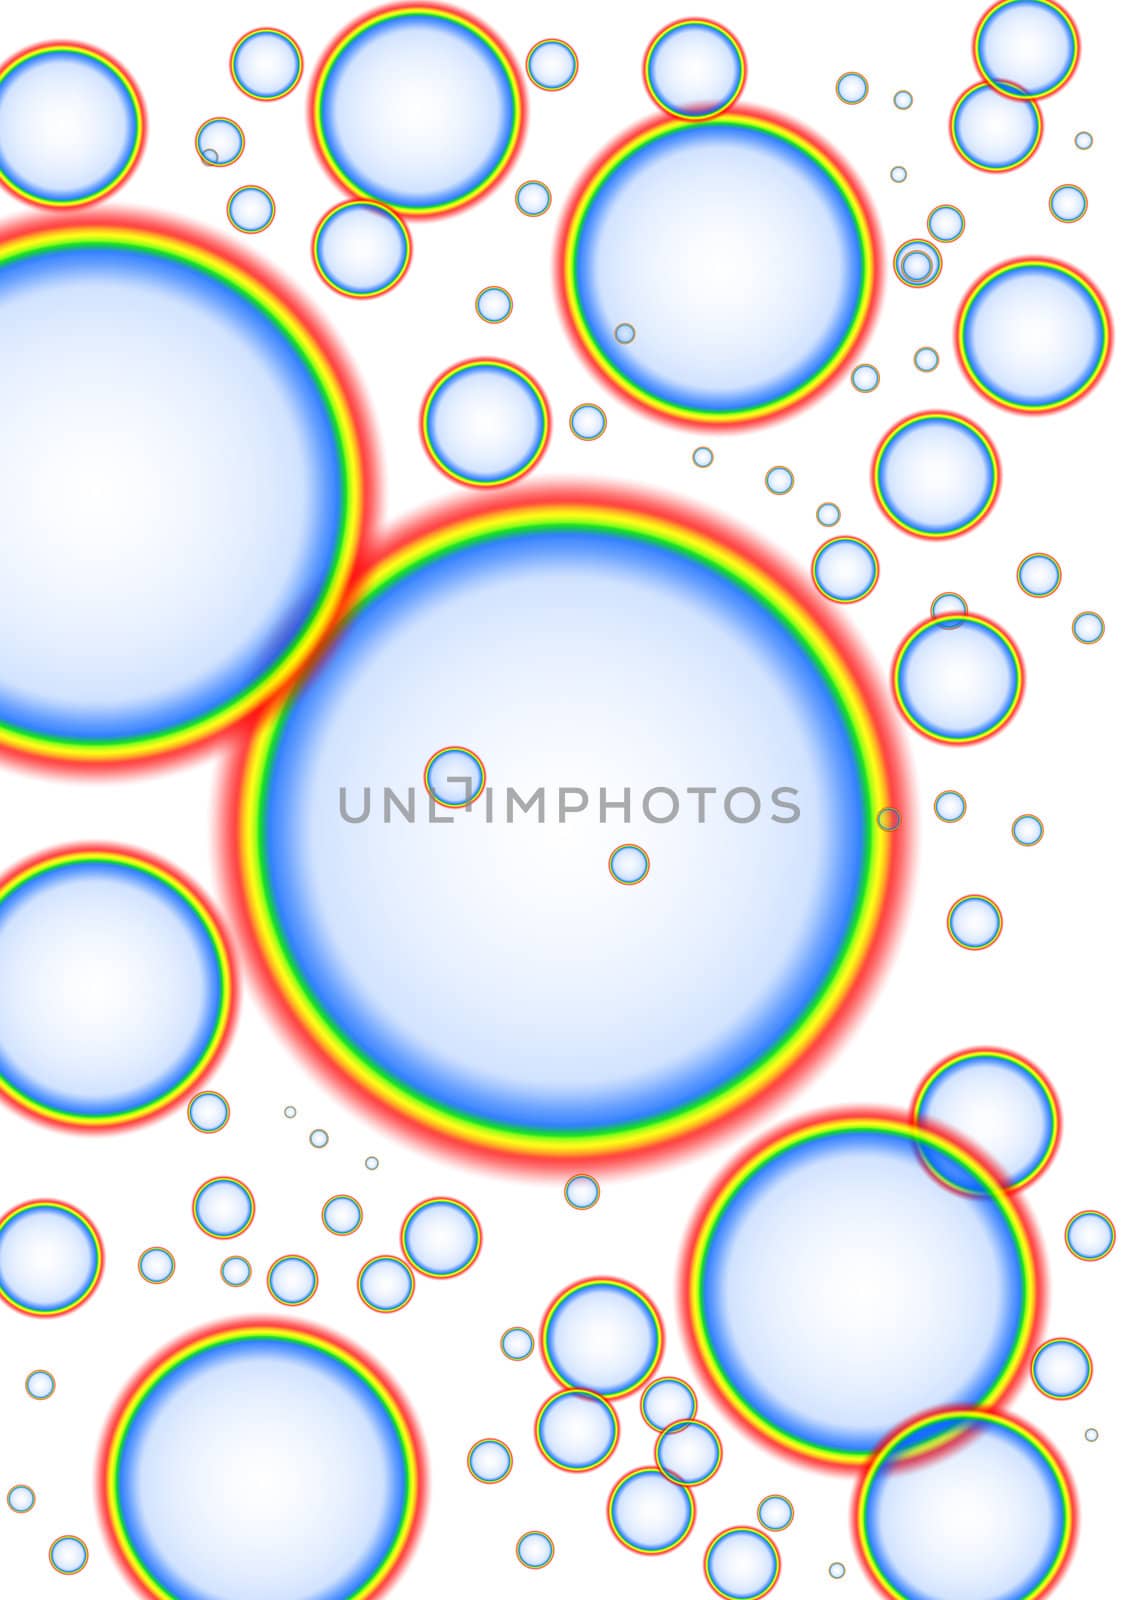 Soap bubbles illustration background by lifeinapixel